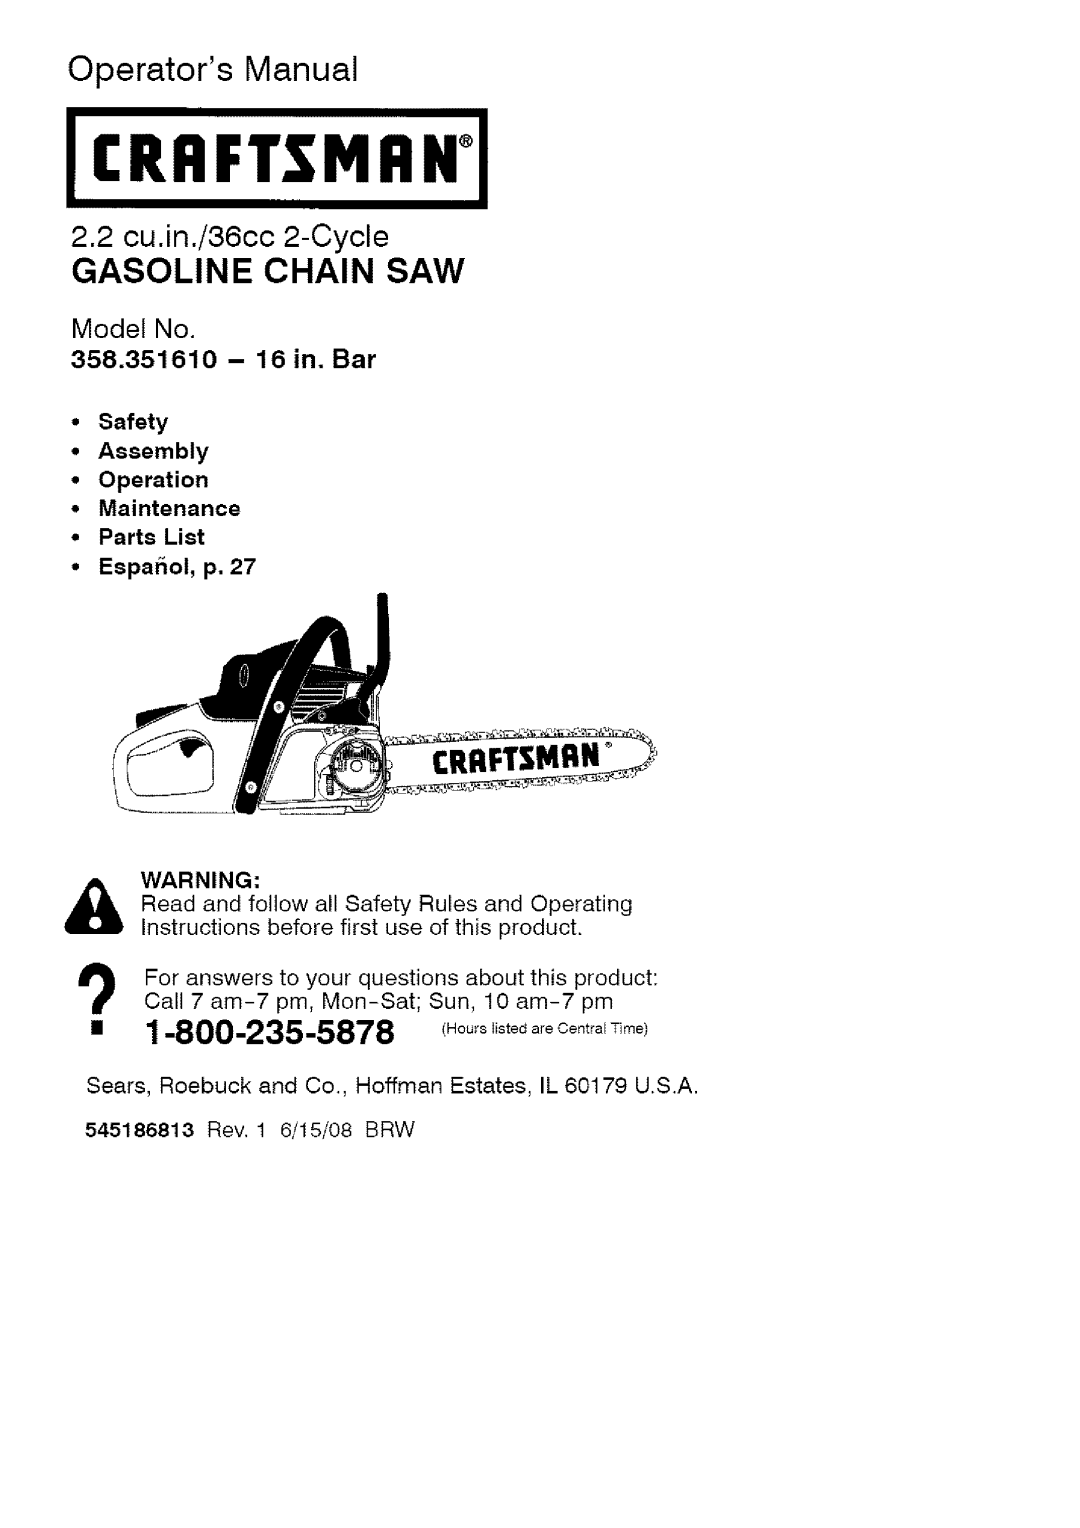 Craftsman manual Model No, 358.351610 - 16 in. Bar, Operators Manual, 2,2 cu.in./36cc 2-Cycle GASOLINE CHAIN SAW 